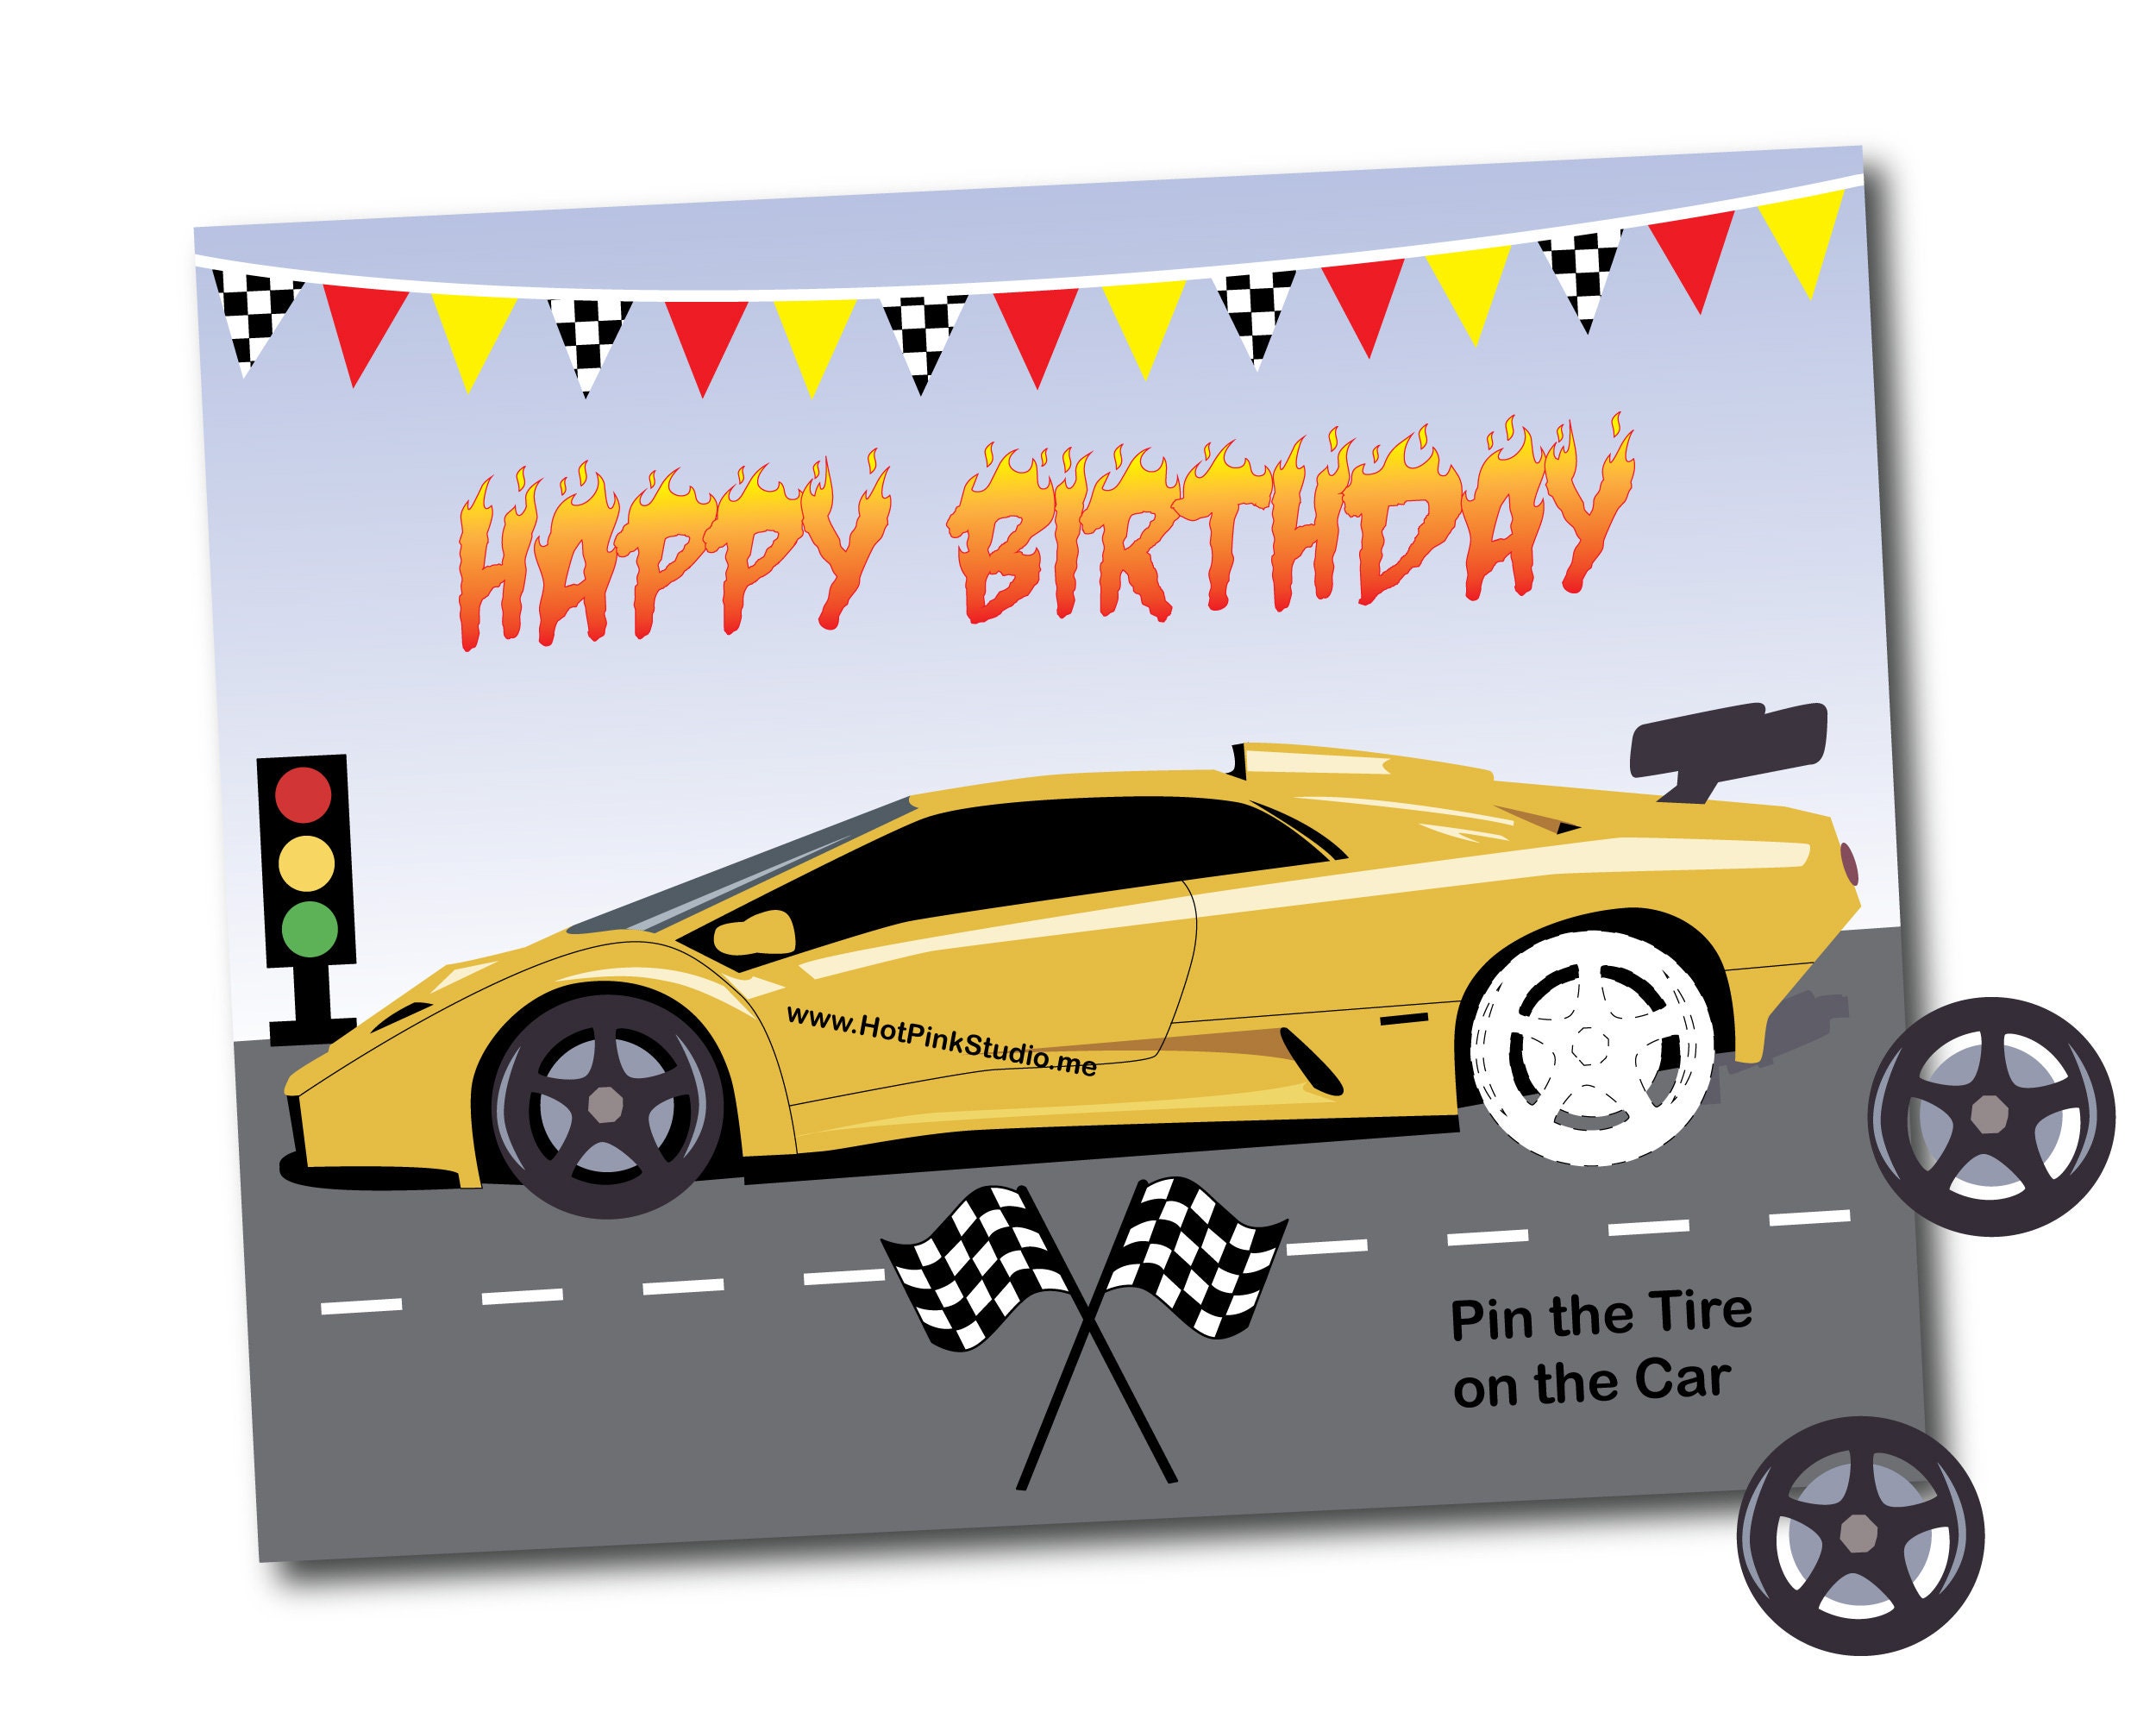 Jogos de Carro - Lamborghini Real Sports Racing: Car Games